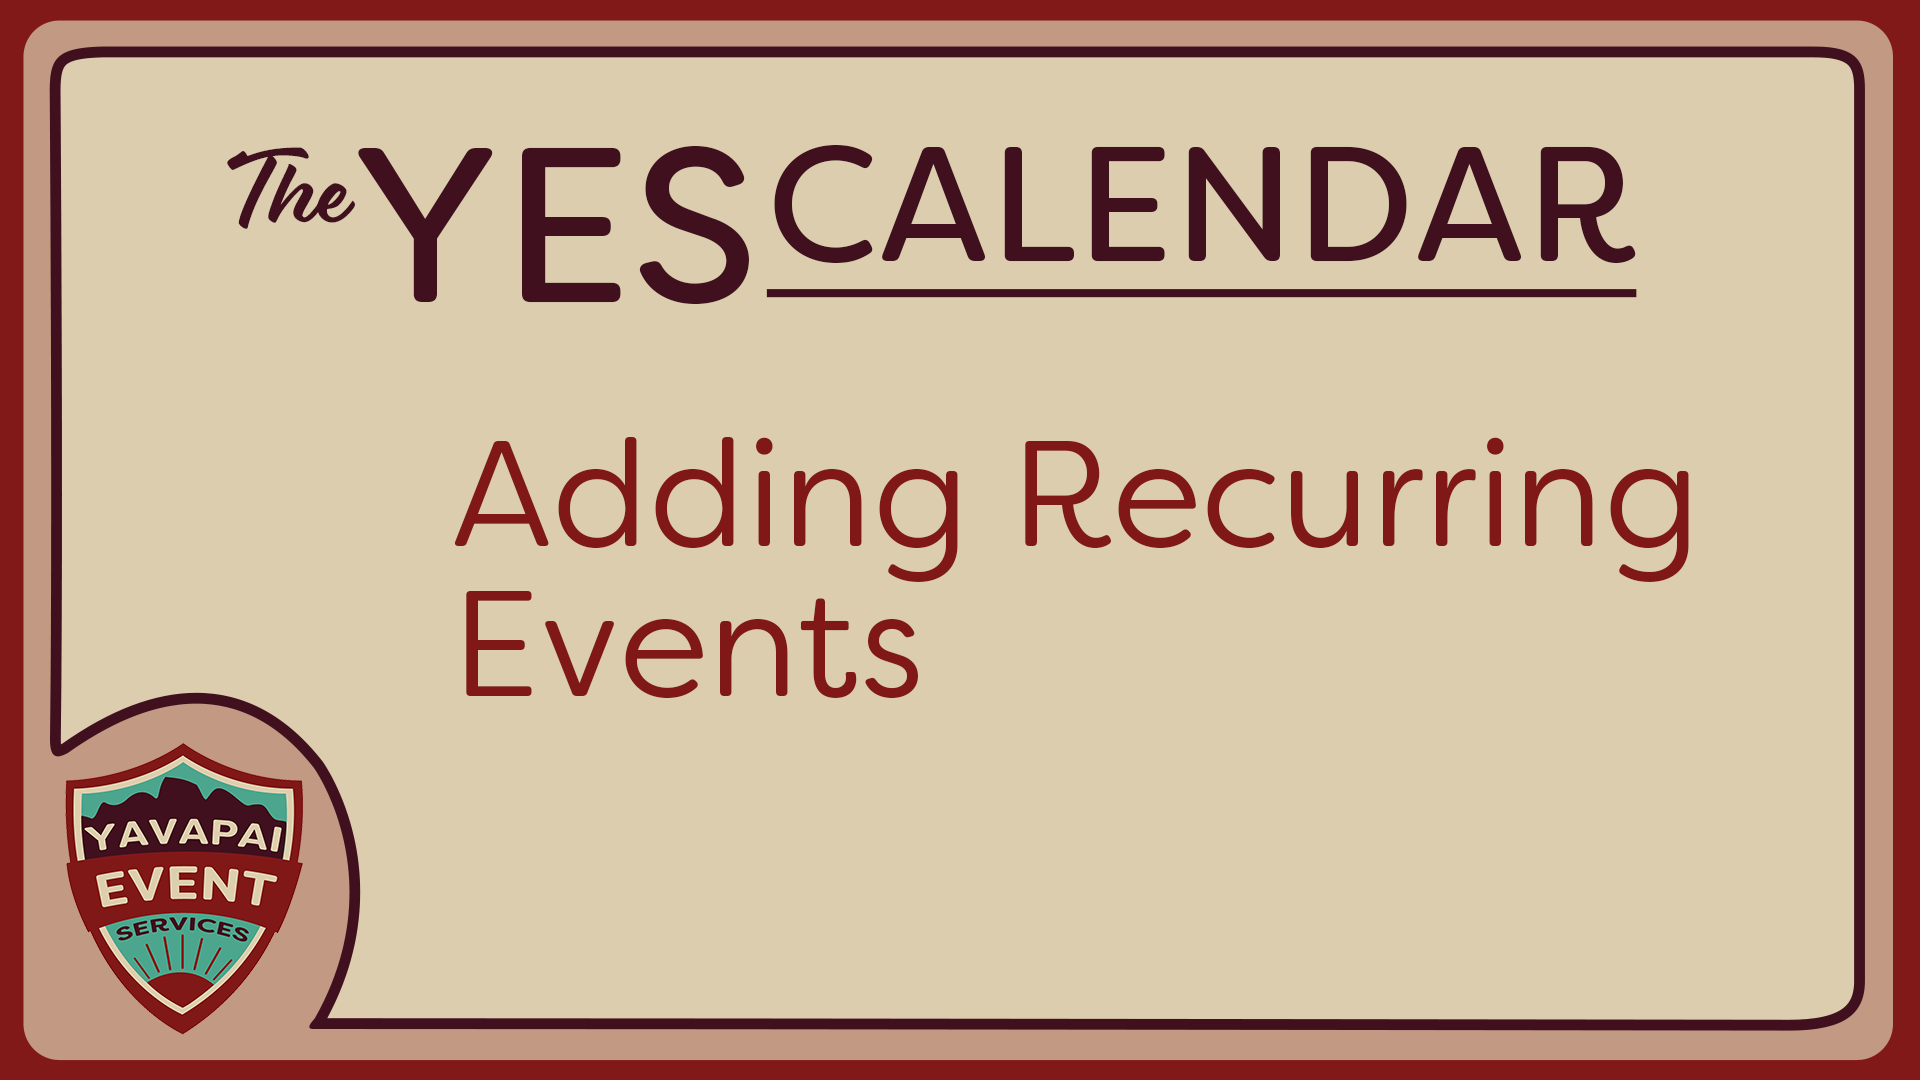 Adding Recurring Events